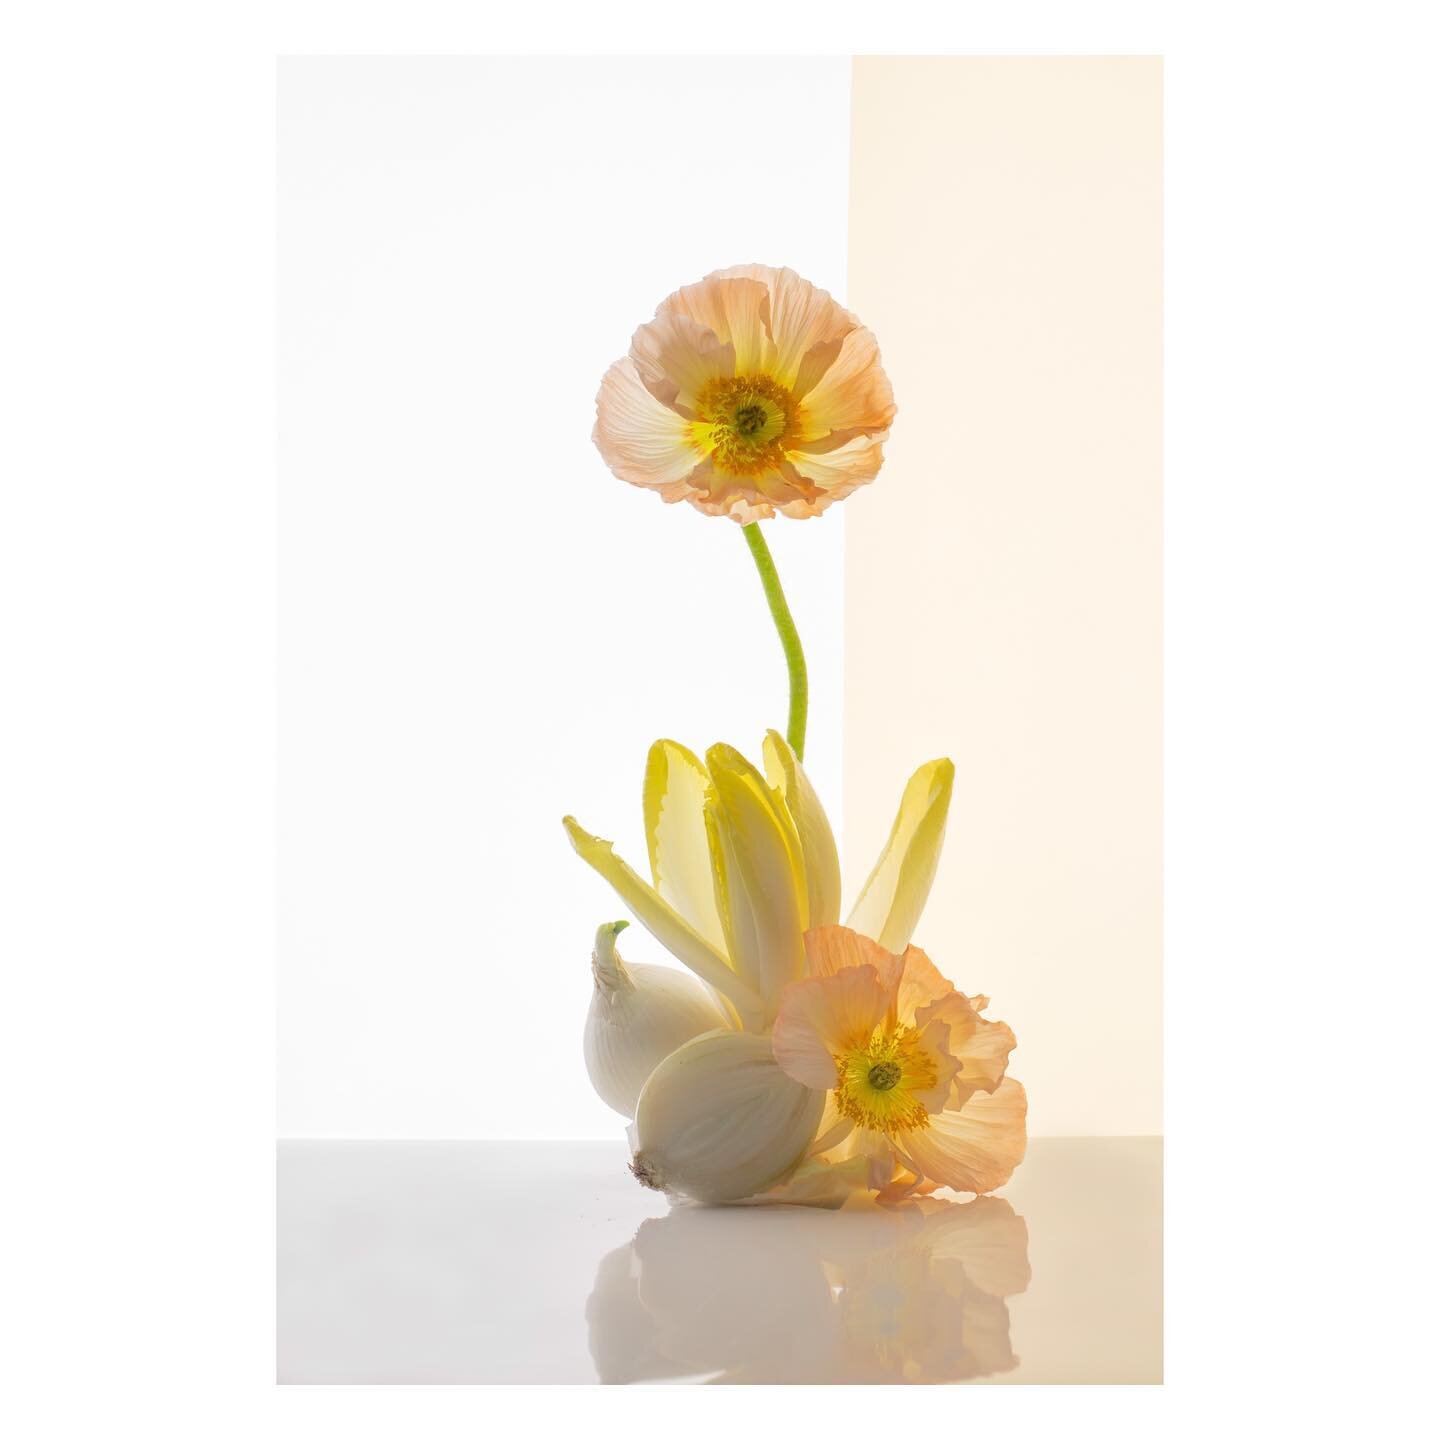 [Jardin d&rsquo;hiver] New personal work by SOPHIE LE GENDRE  @sophie_le_gendre⁠
*
Floral stylist @sol.paris.studio
*
#flowerphotographer #stilllifephotography #floralserdesign #artvegetal #flowerphotography #flower #inspiredbynature #photoagency #ph